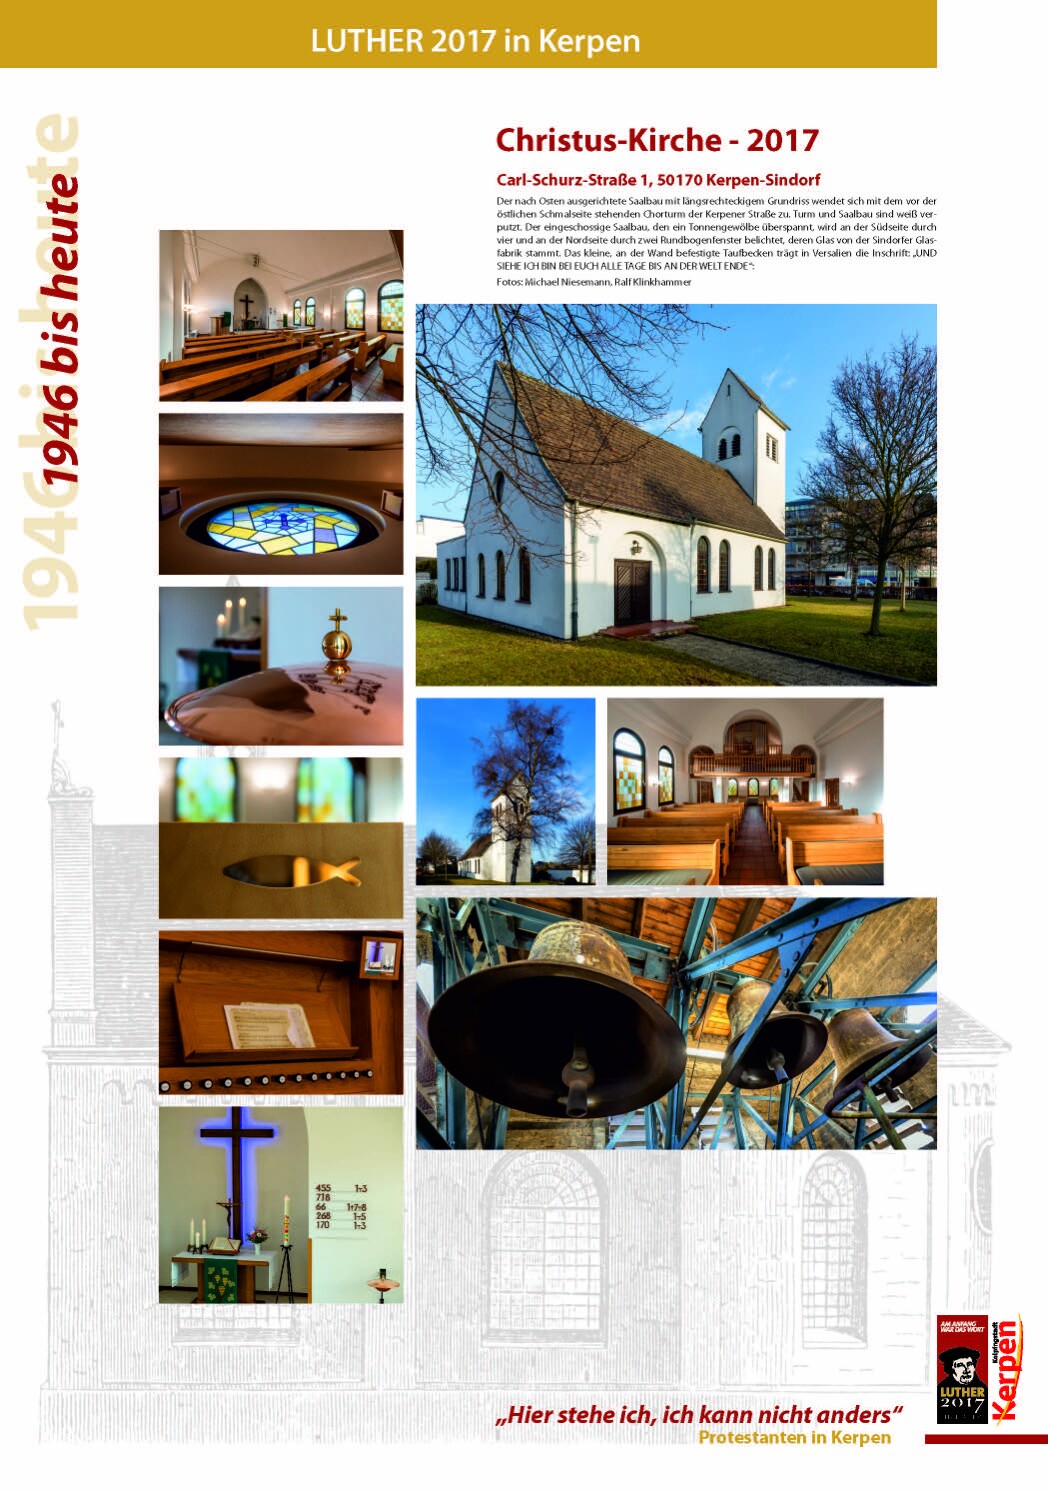 Christus-Kirche Sindorf - Chronik 1978 bis heute (Heimatmuseum Sindorf CC BY-NC-SA)